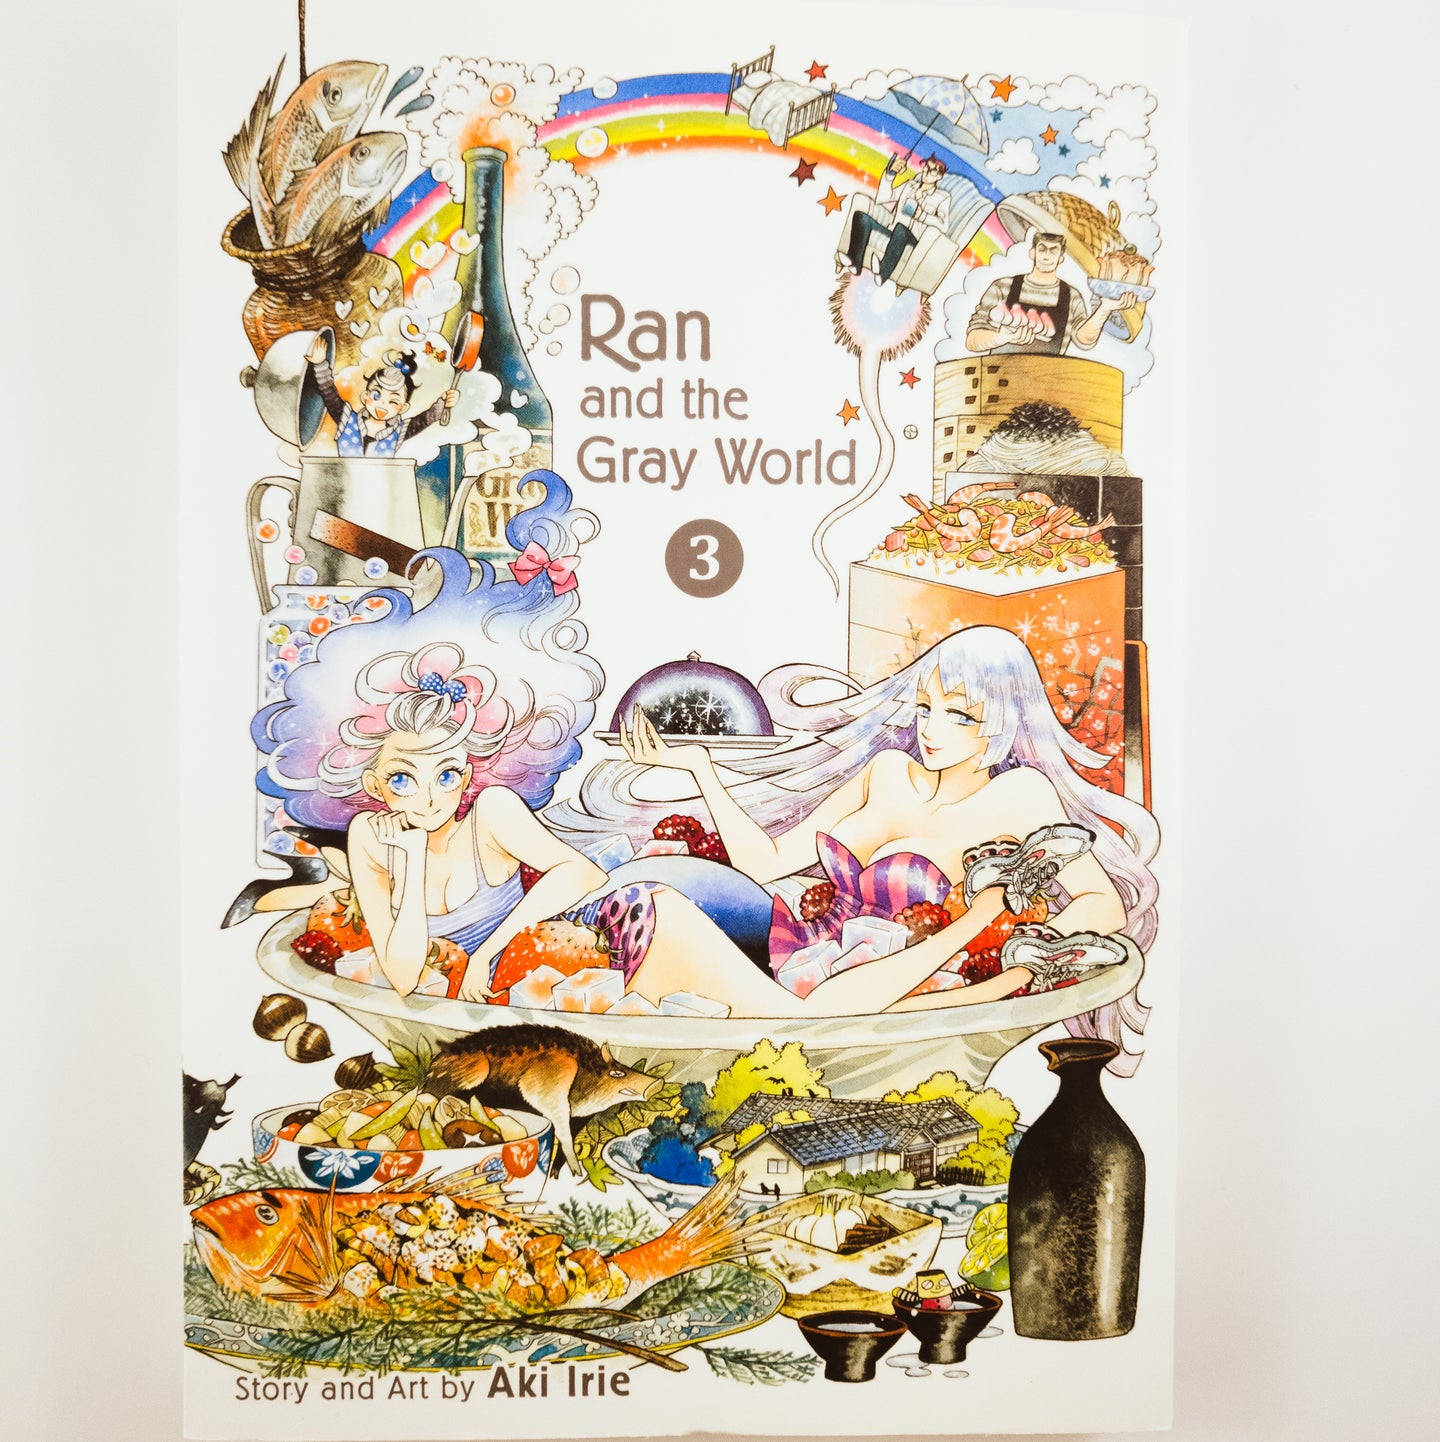 Ran and the Gray World Volume 3. Manga by Aki Irie.